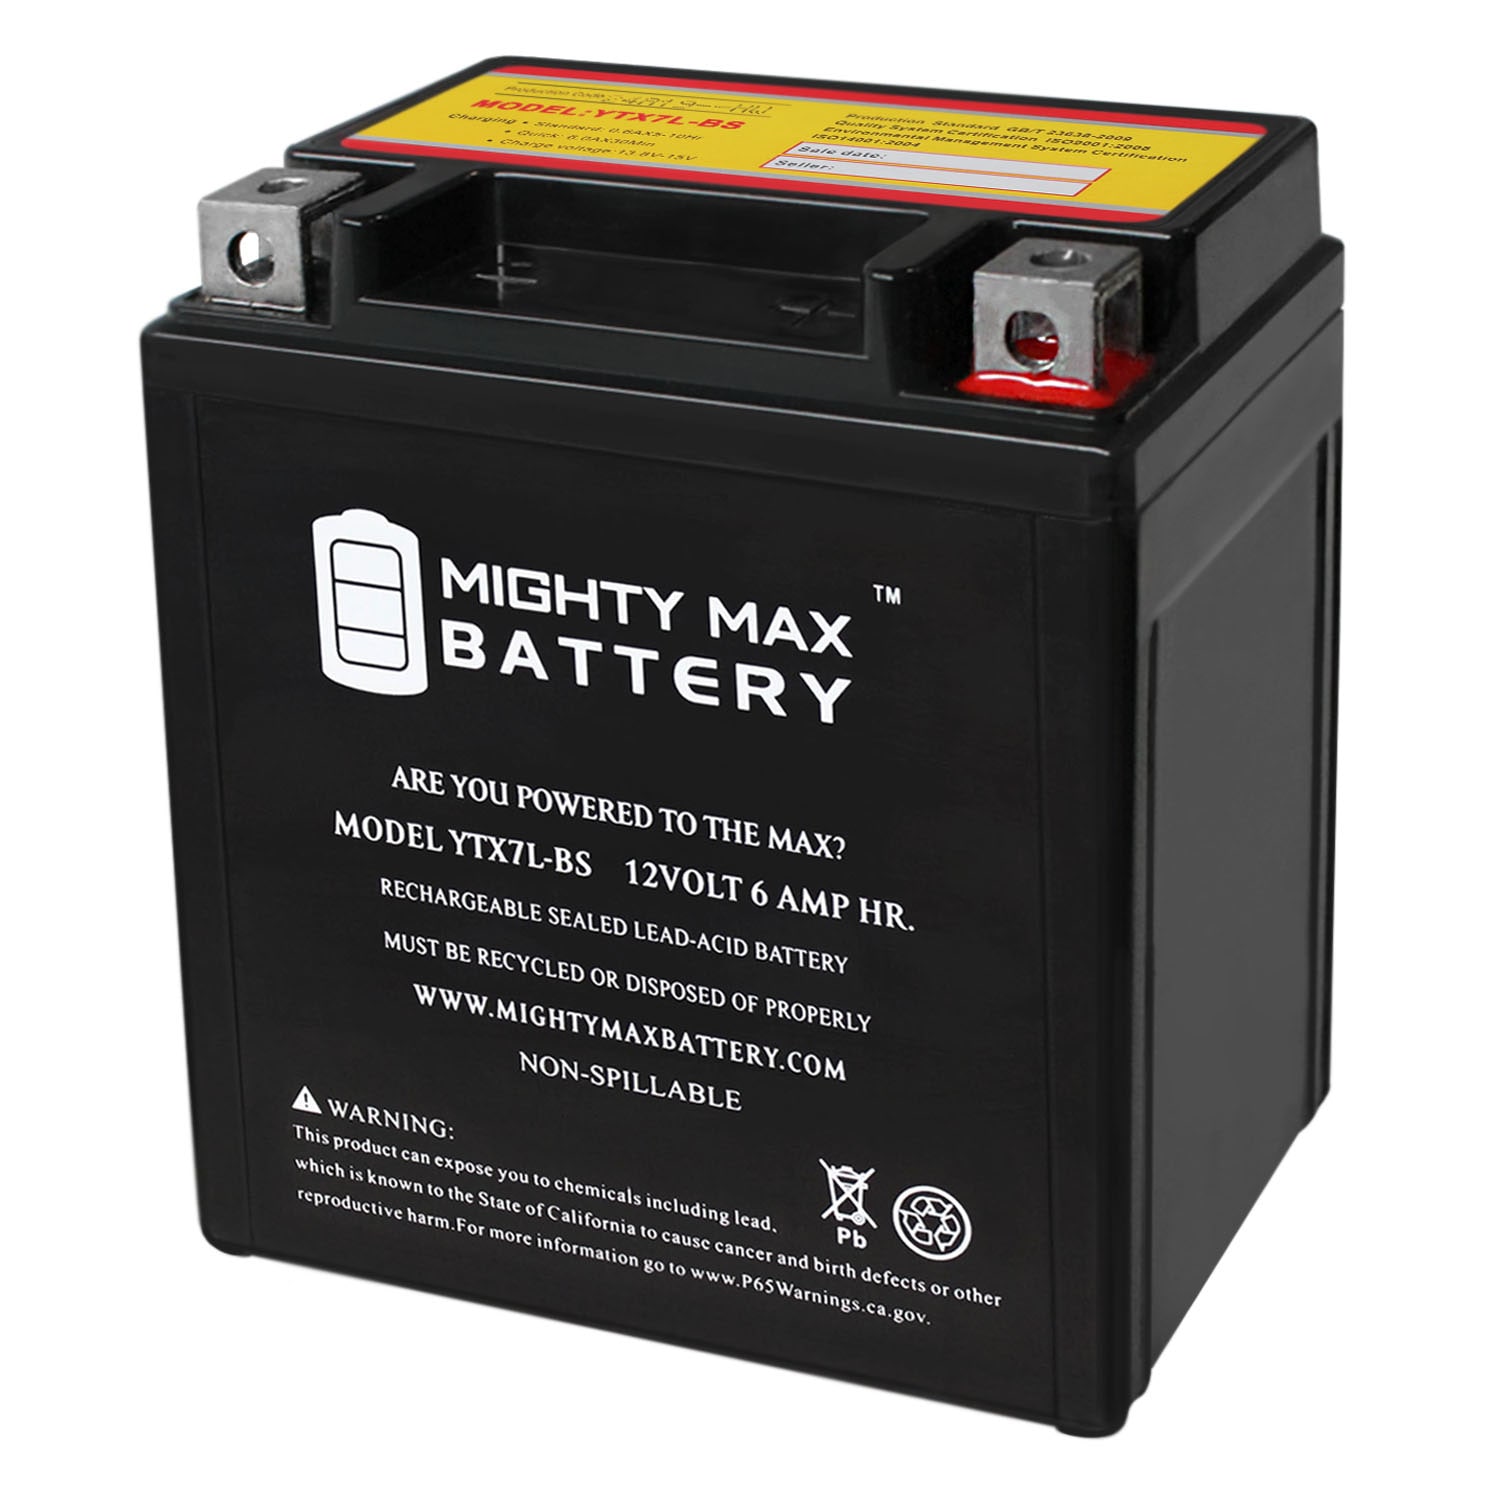 FQS YB7L-B2 - Batería Moto 12v 7Ah 85A CCA + D - FQS Battery